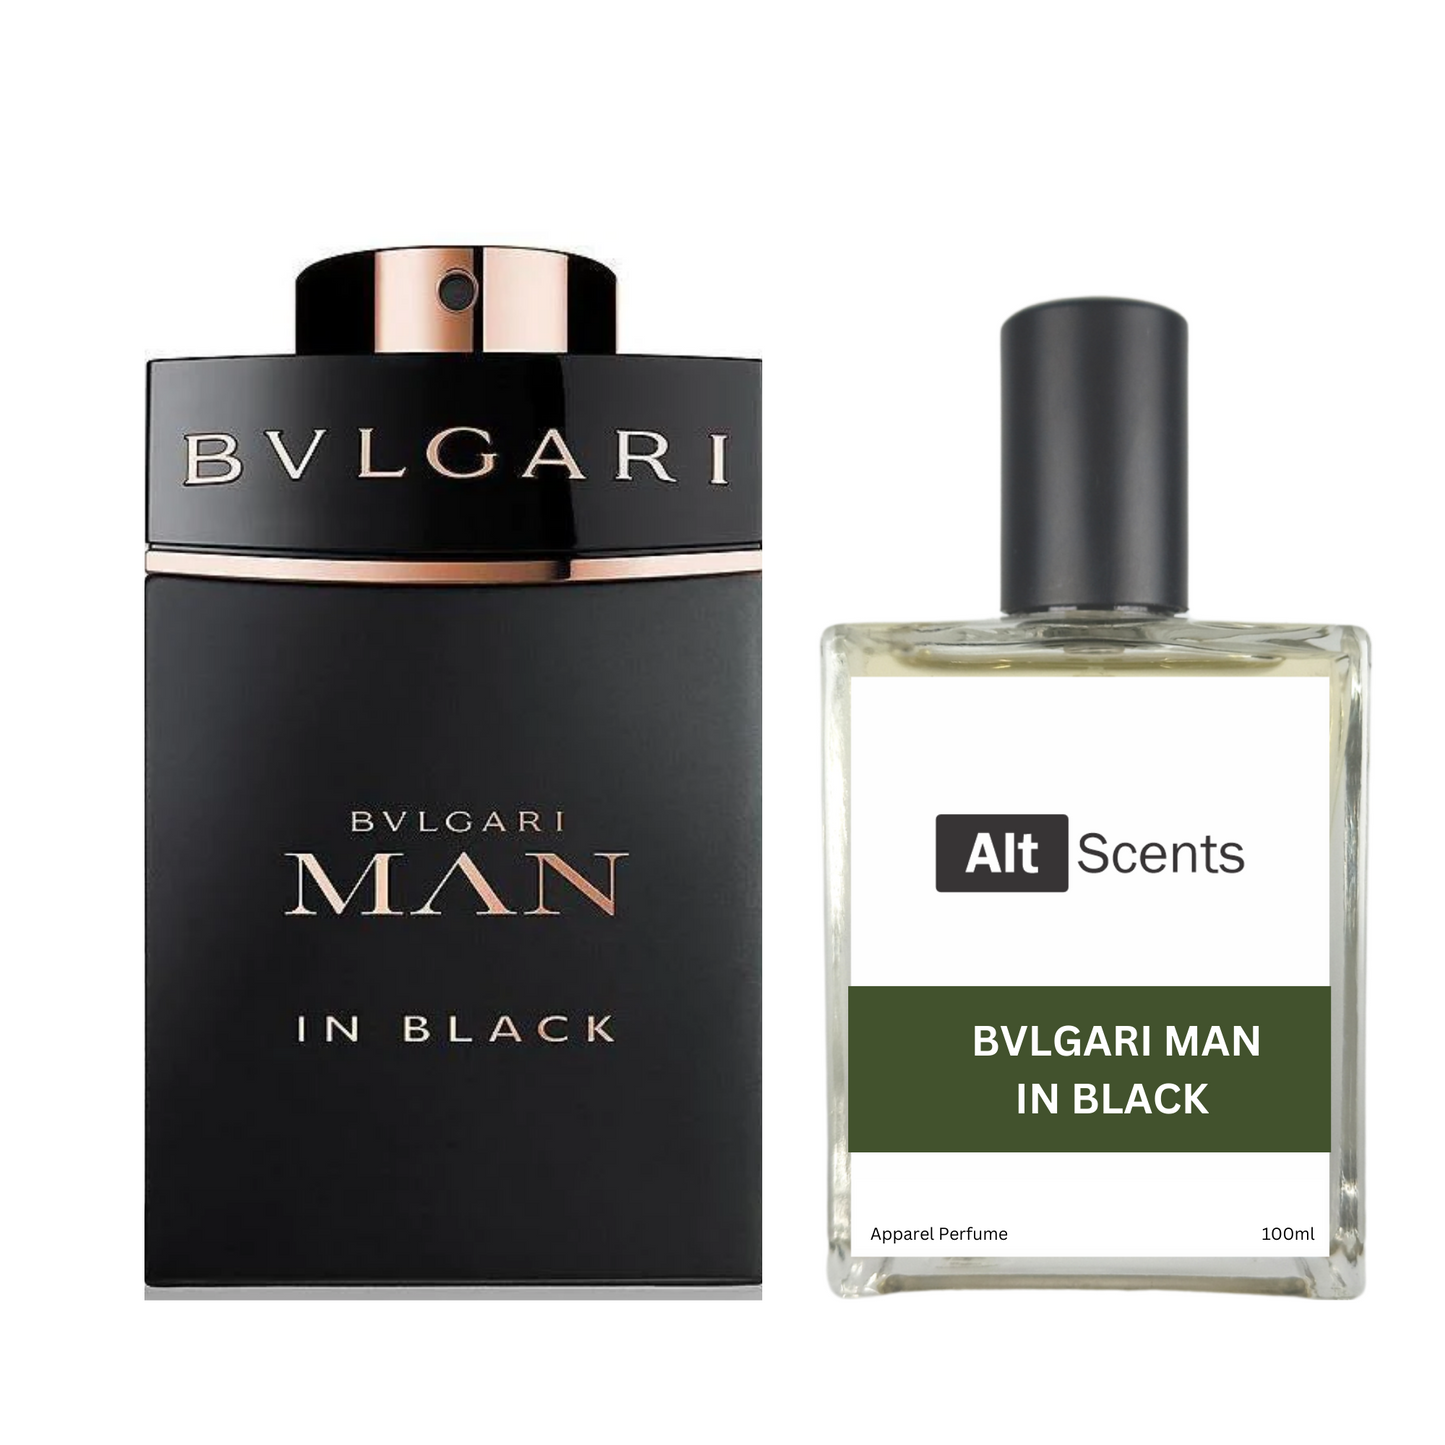 Bvlgari Man In Black type Perfume